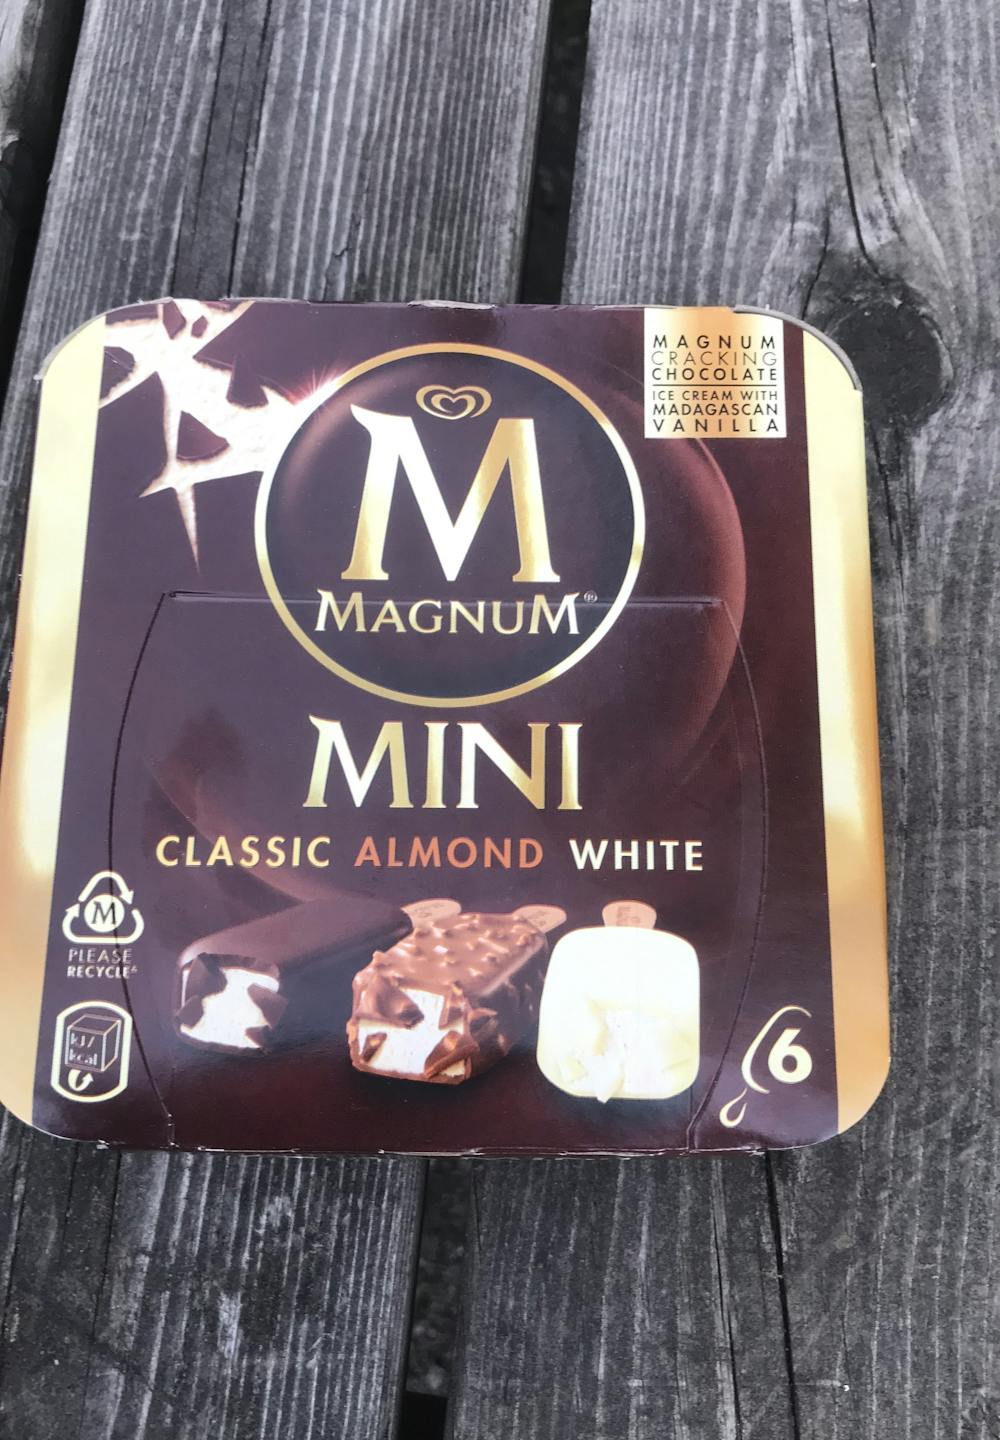 Mini, classic almond white, Magnum